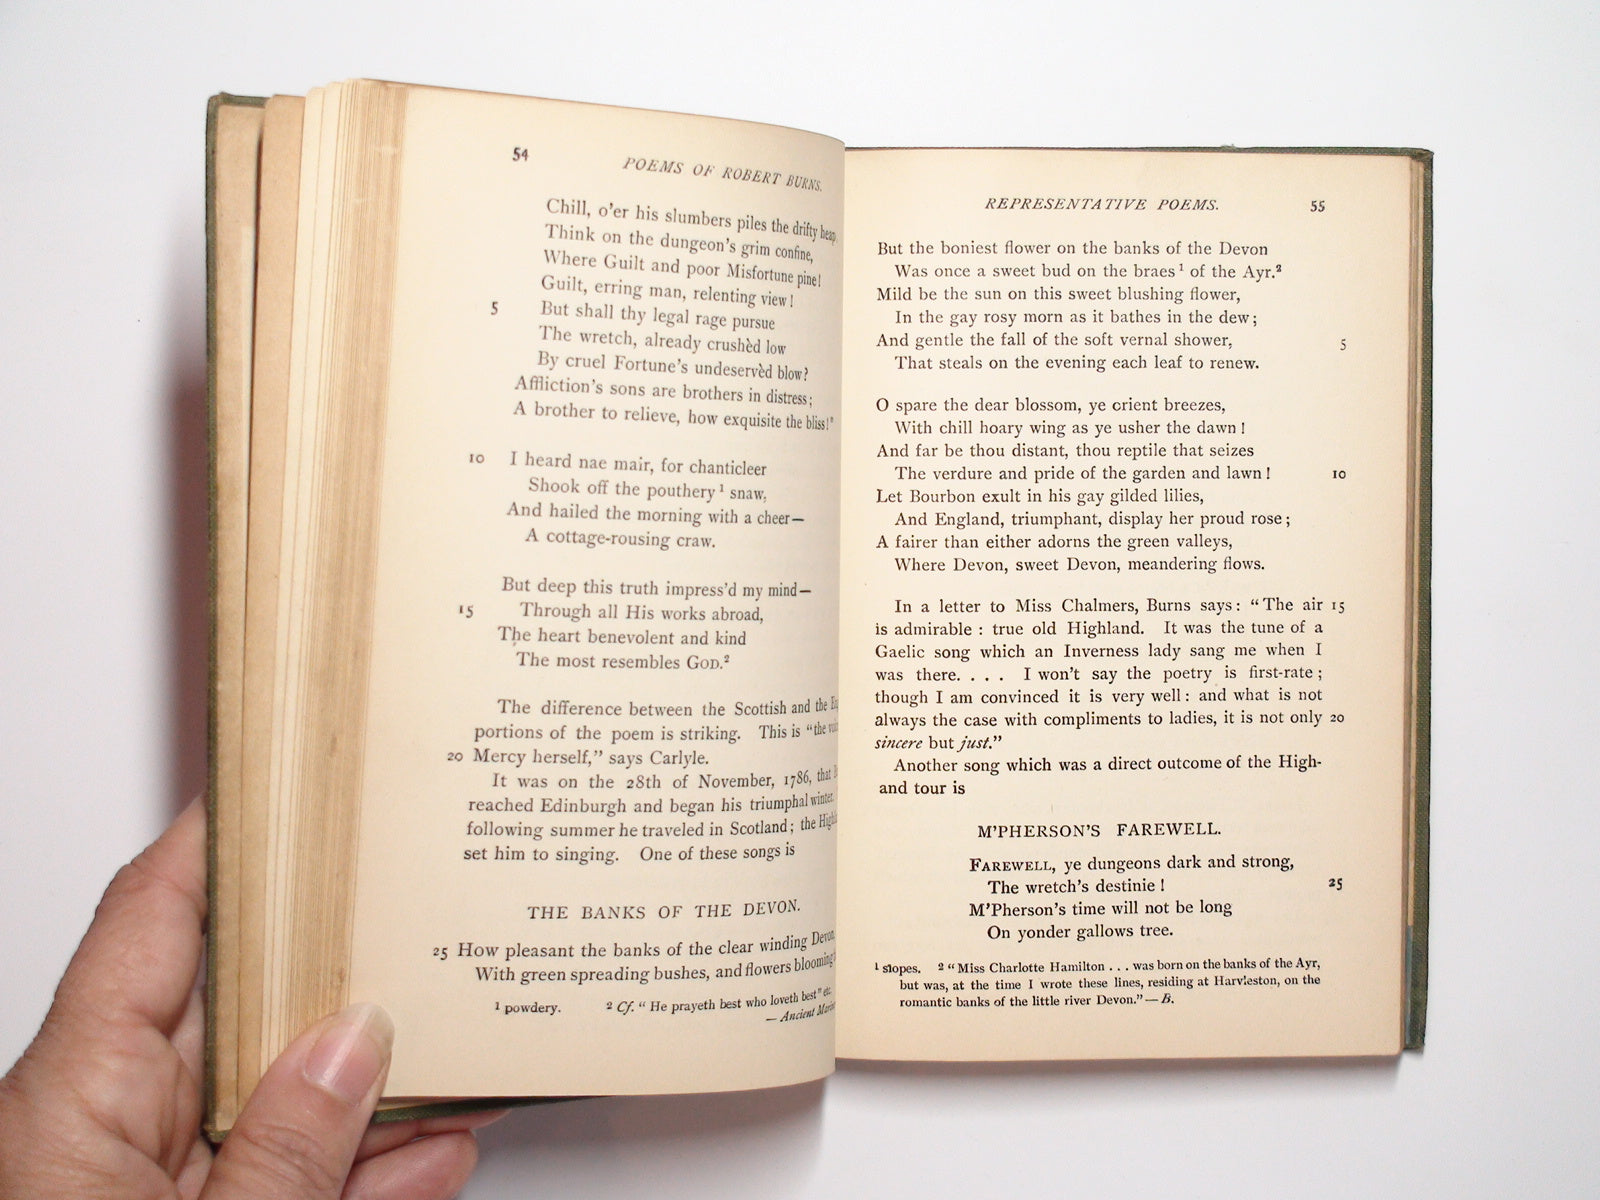 Representative Poems of Robert Burns, Edited by Charles Lane Hanson, 1924